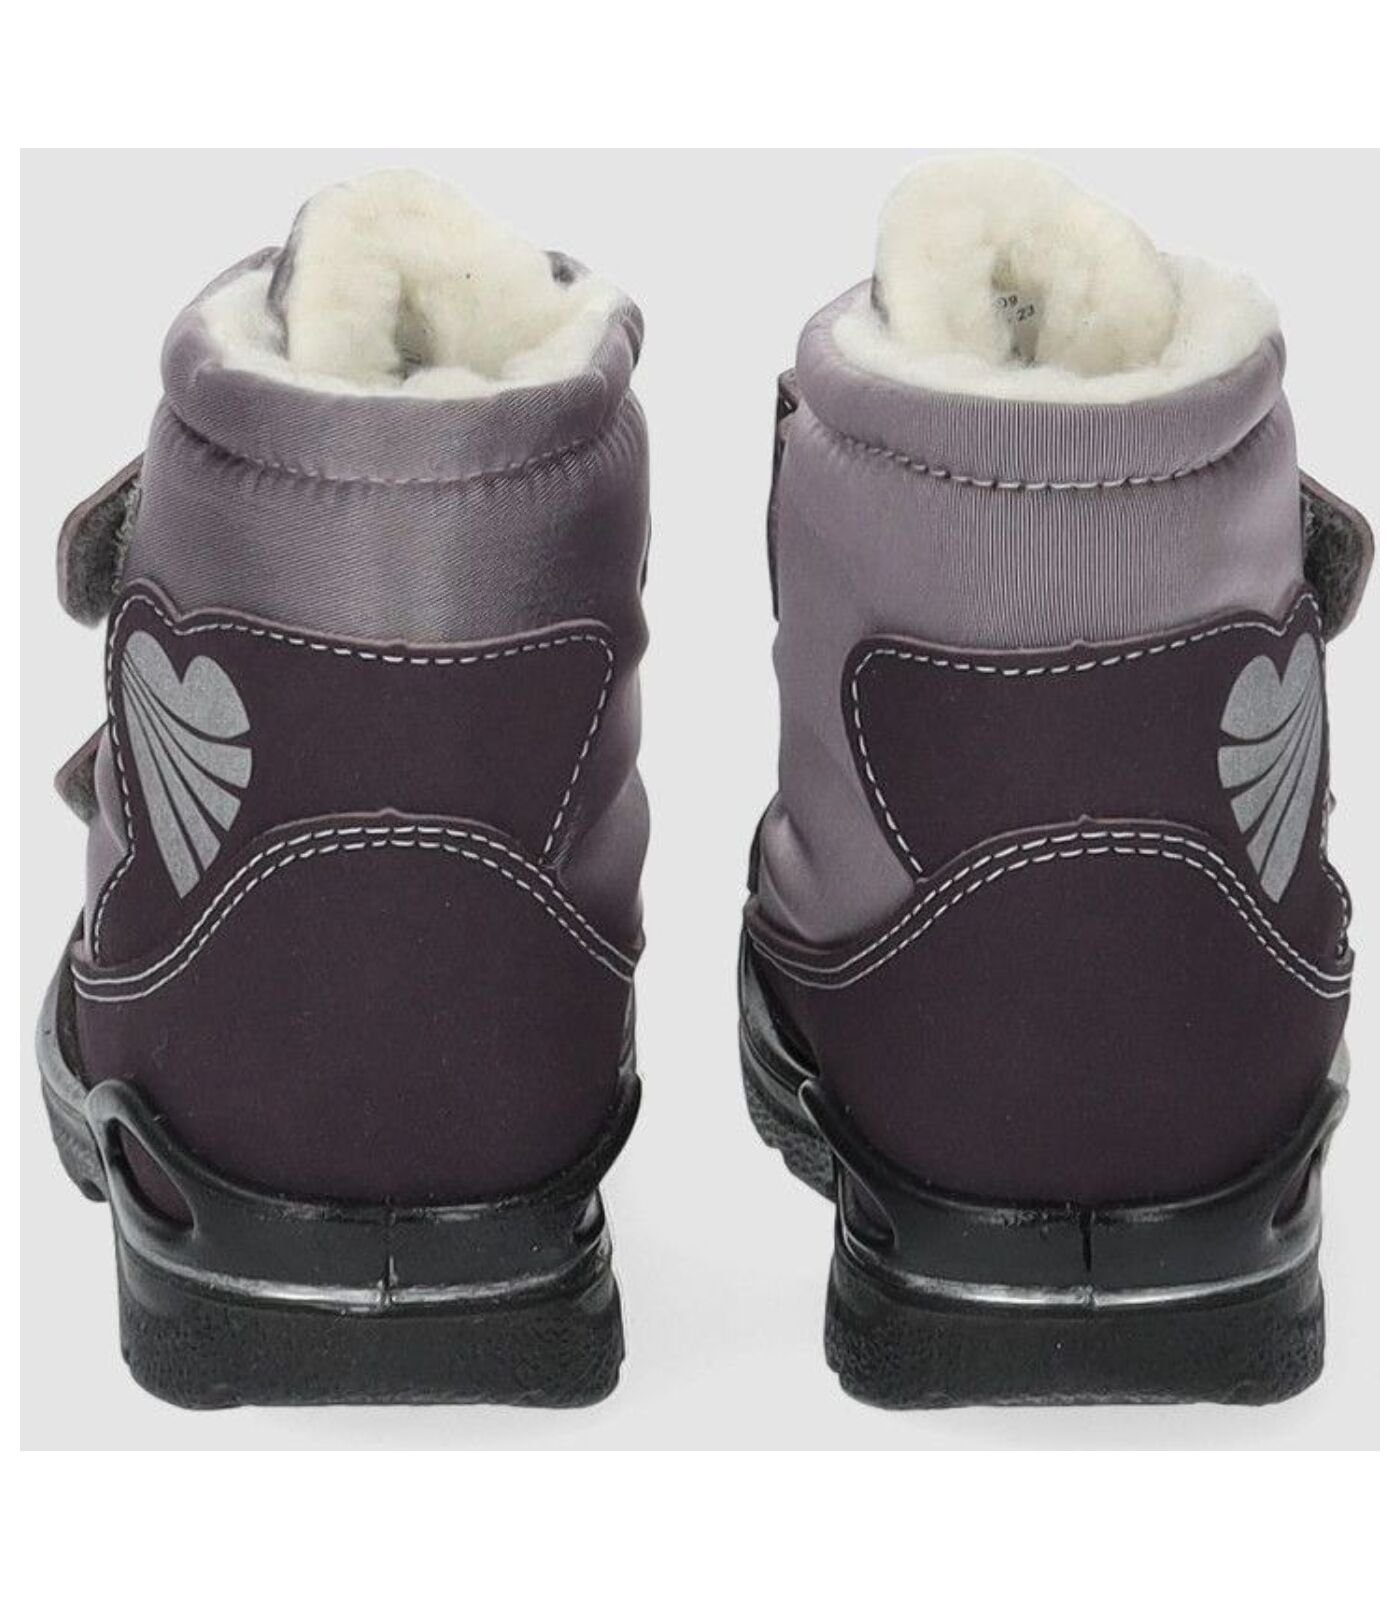 Pepino Synthetik/Textil Purple Stiefel Stiefel